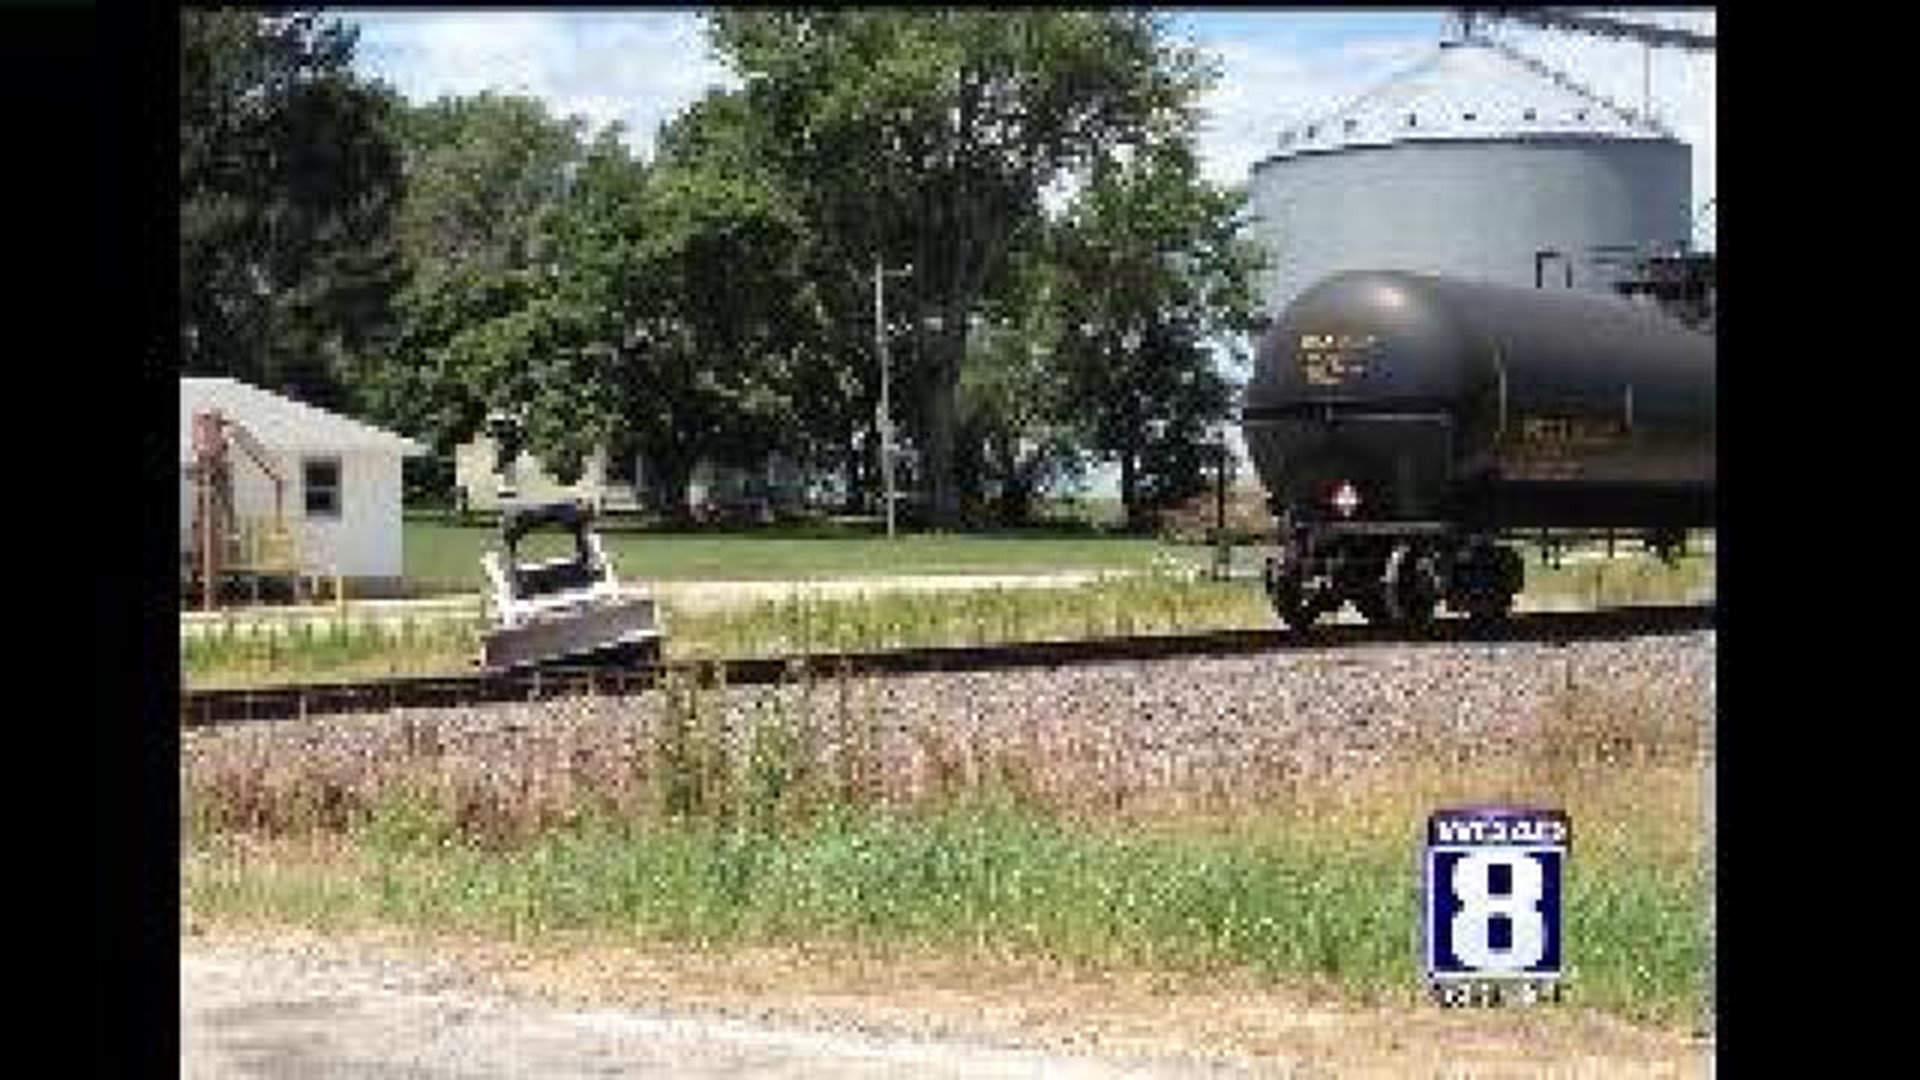 Man killed in Alexis, Illinois train accident